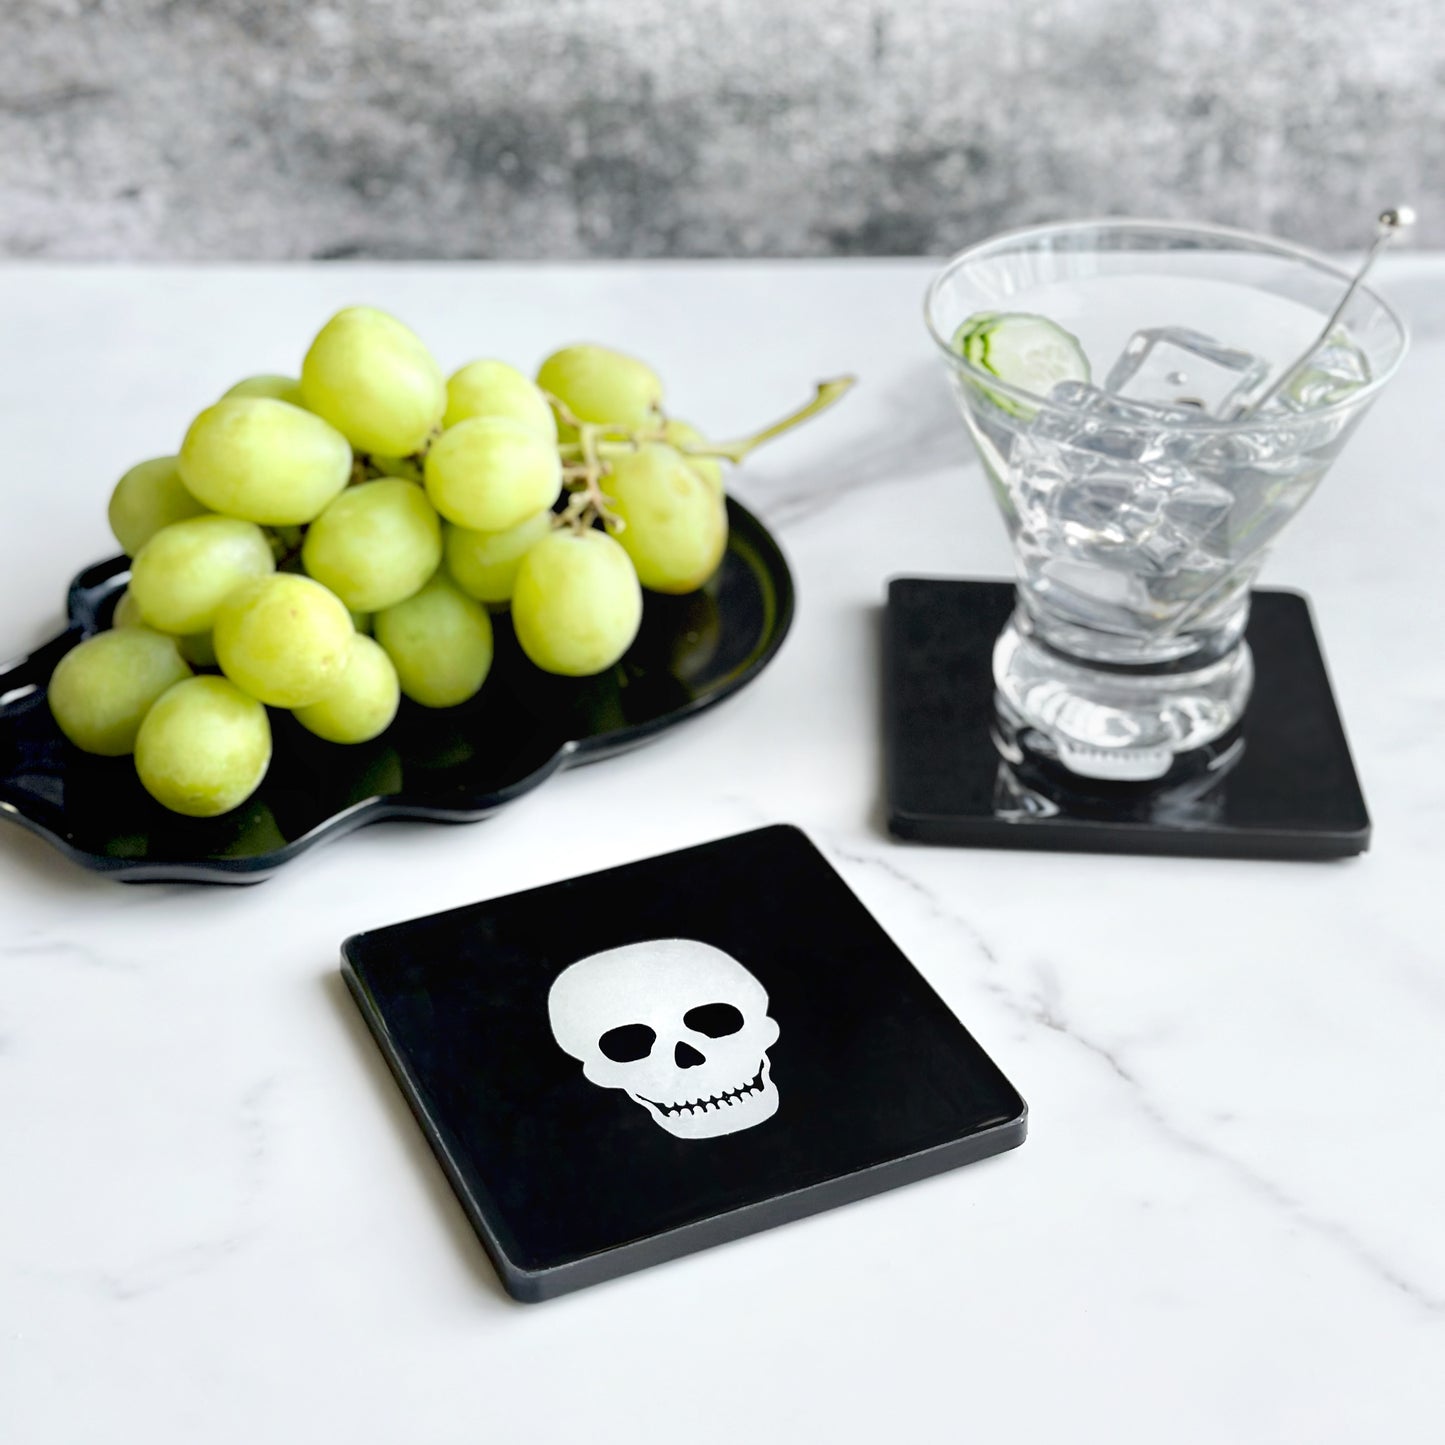 Silver Skull Black | Set of 2 Coasters